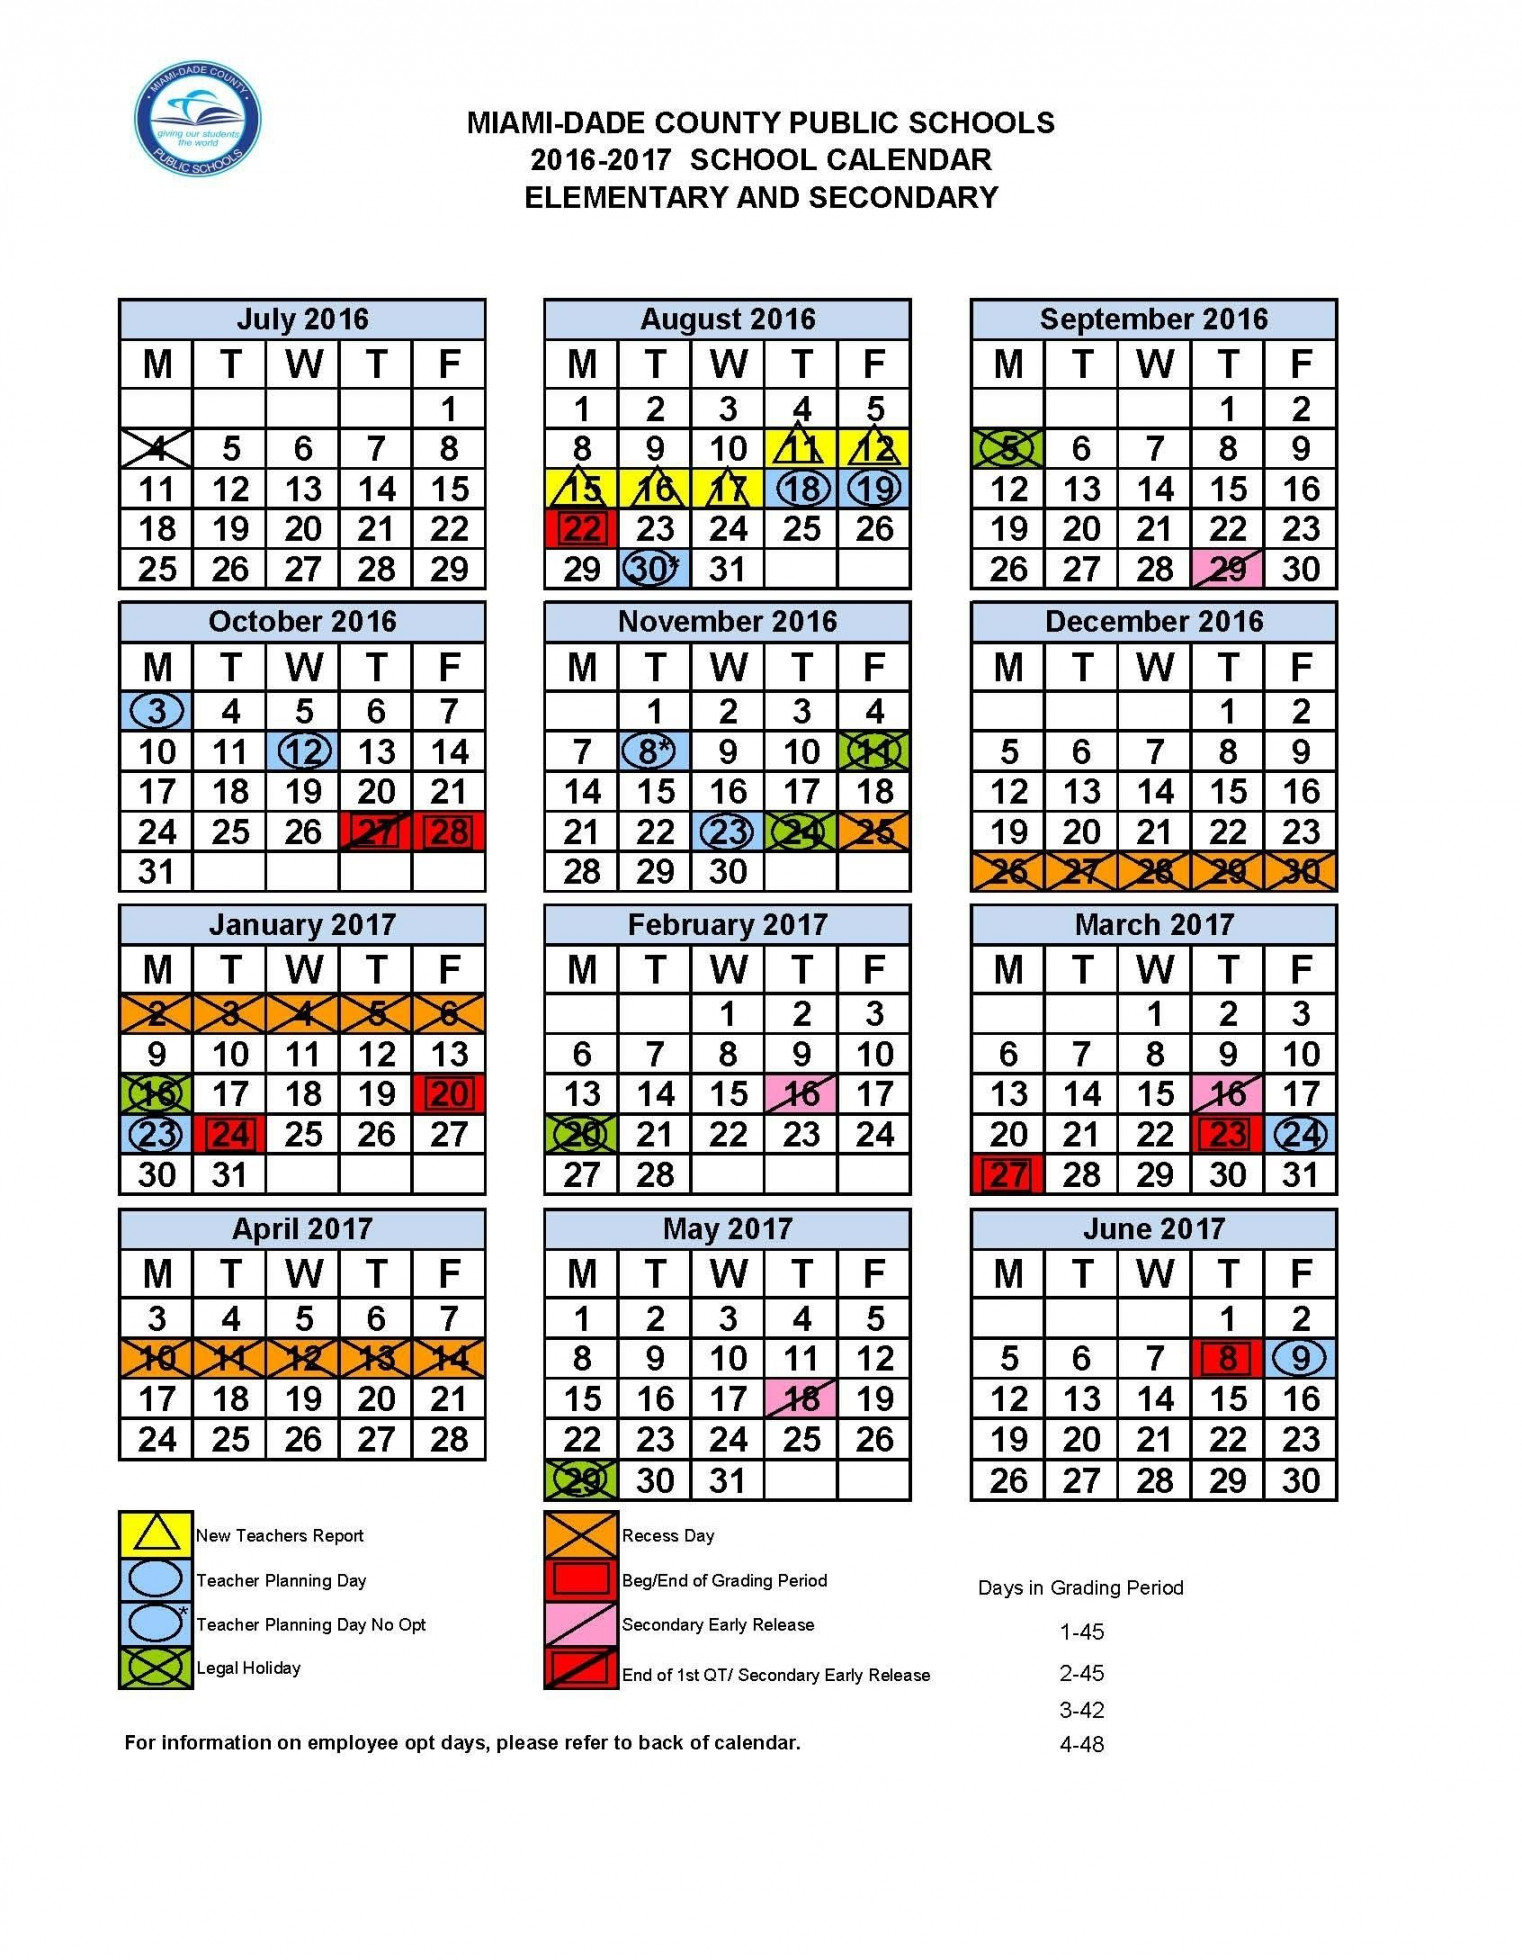 Exceptional Calendar School Year Miami Dade  School calendar